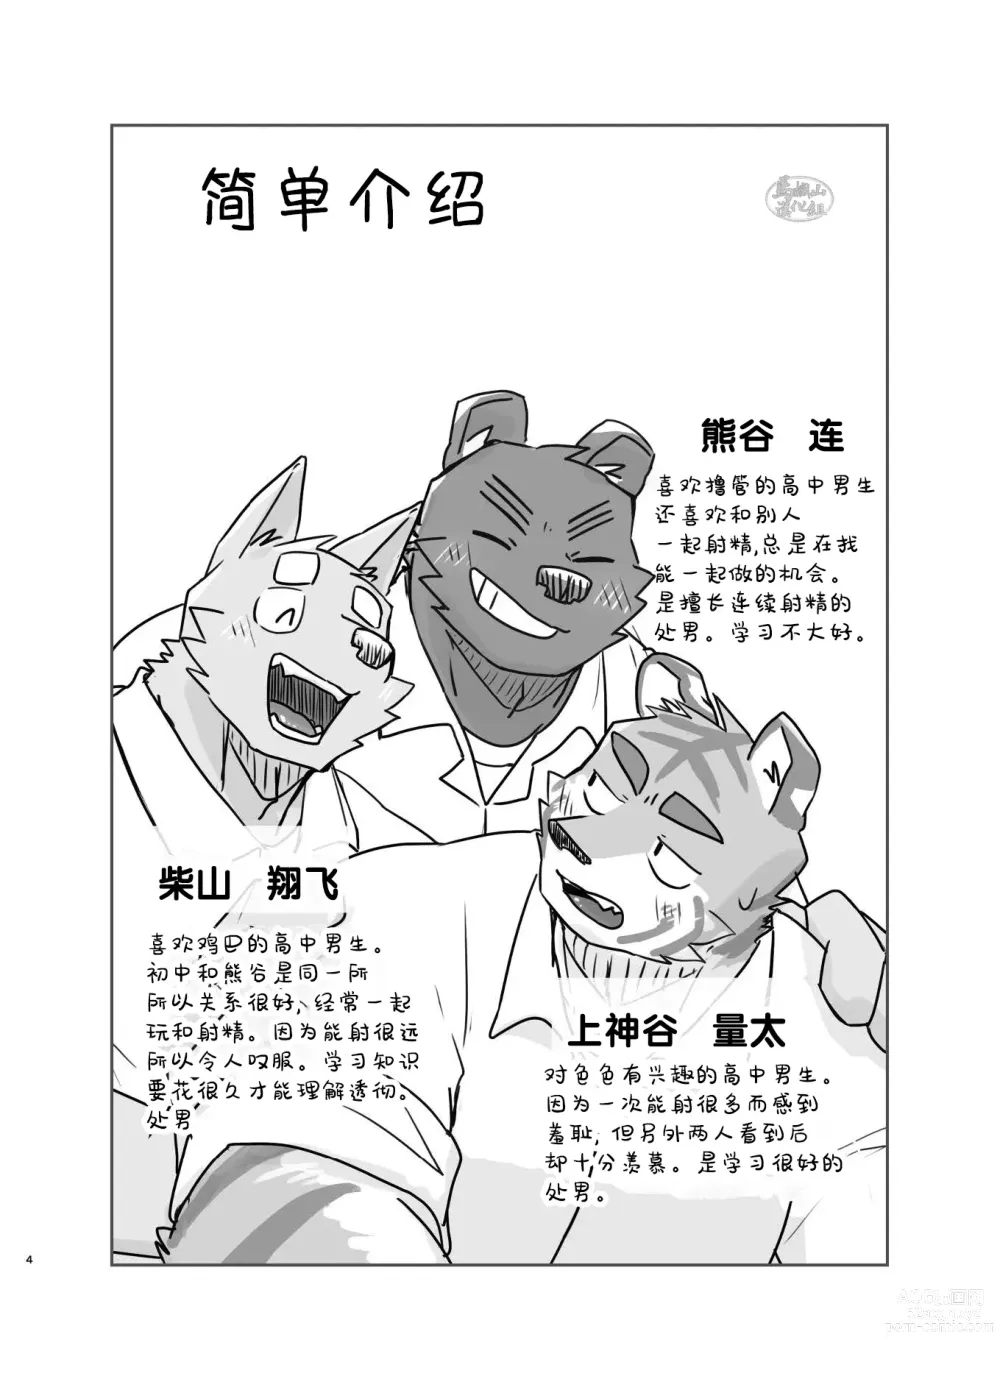 Page 4 of doujinshi 关于我在教室被榨精这件事